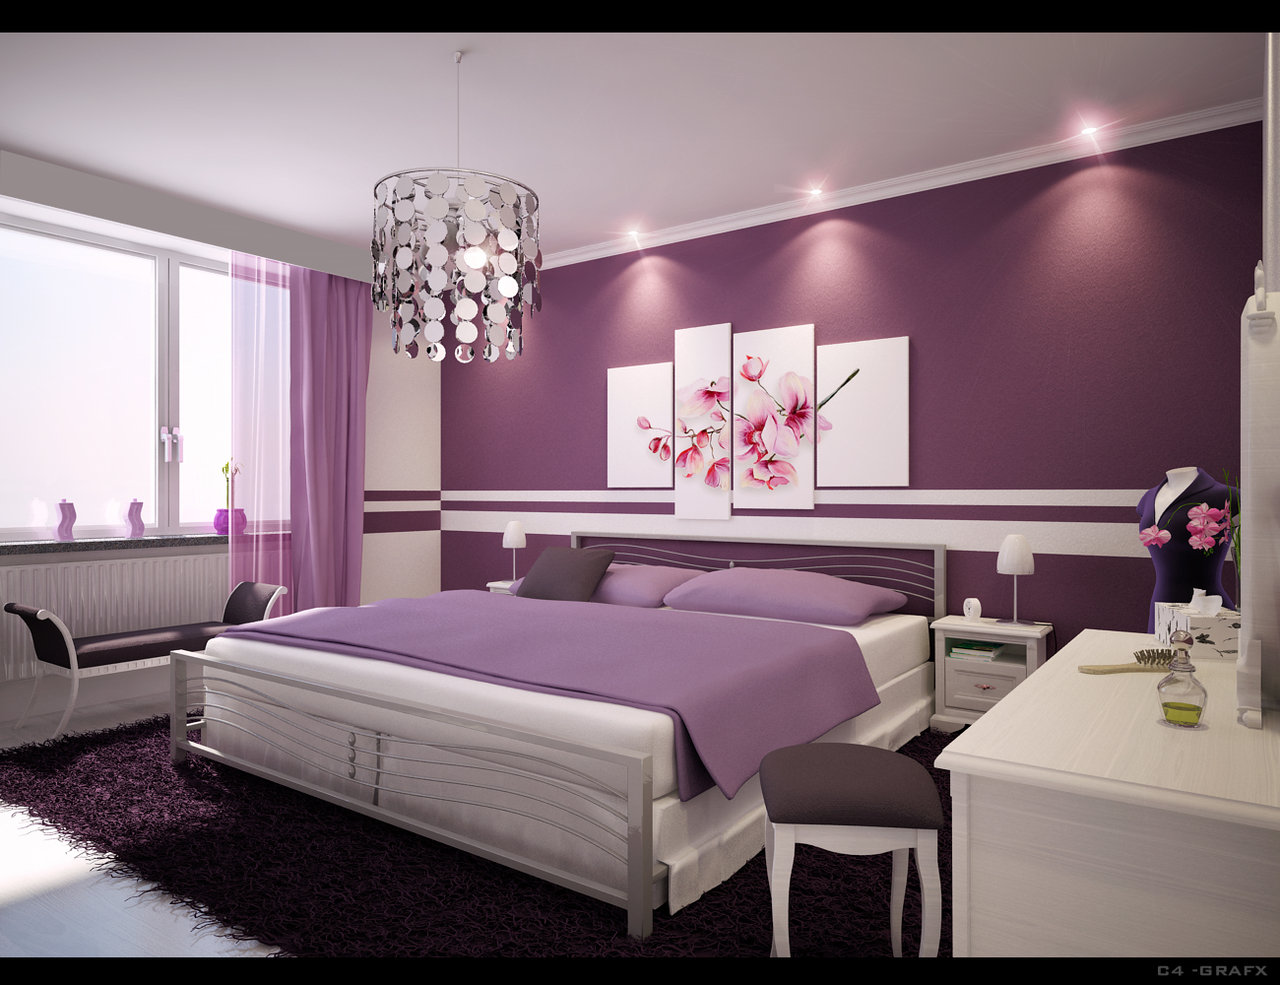 Stunning Girls Bedroom Interior Design Ideas 1280 x 985 · 201 kB · jpeg